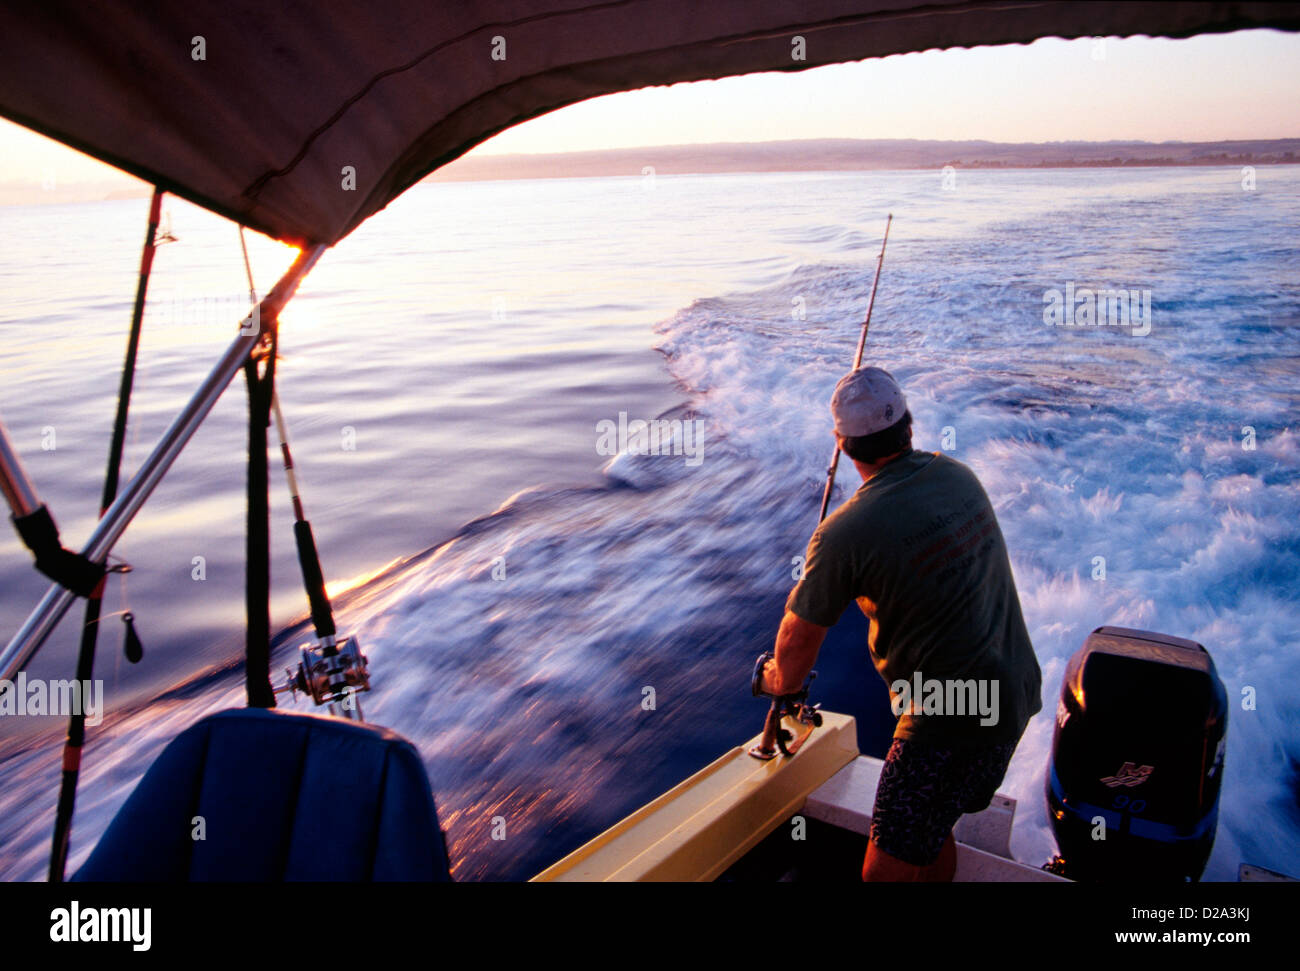 https://c8.alamy.com/comp/D2A3KJ/man-rigging-deep-sea-fishing-poles-on-fishing-boat-off-the-north-shore-D2A3KJ.jpg